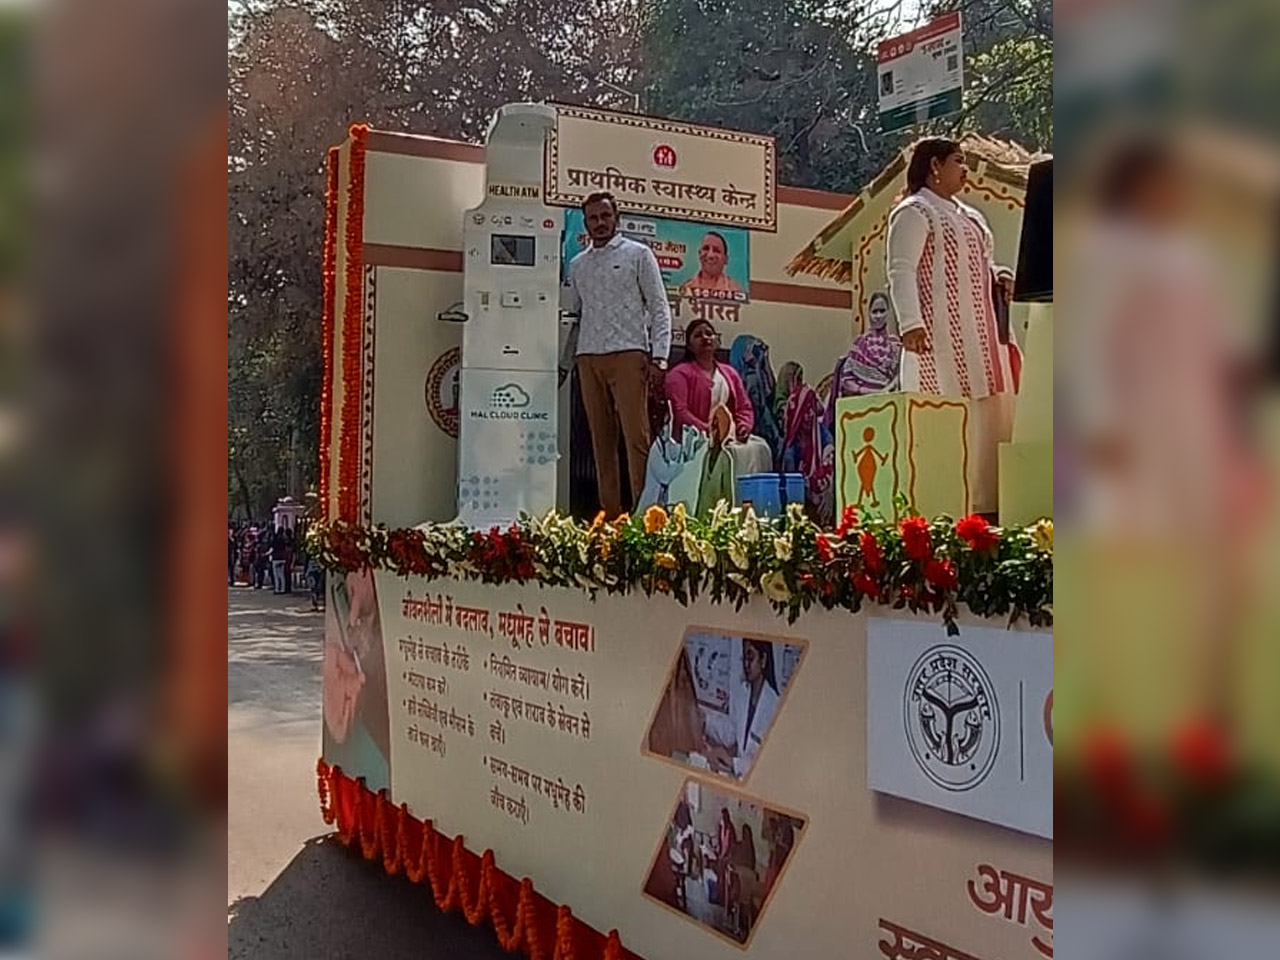 Clinics On Cloud Health Kiosk was featured at Republic Parade of Uttarpradesh